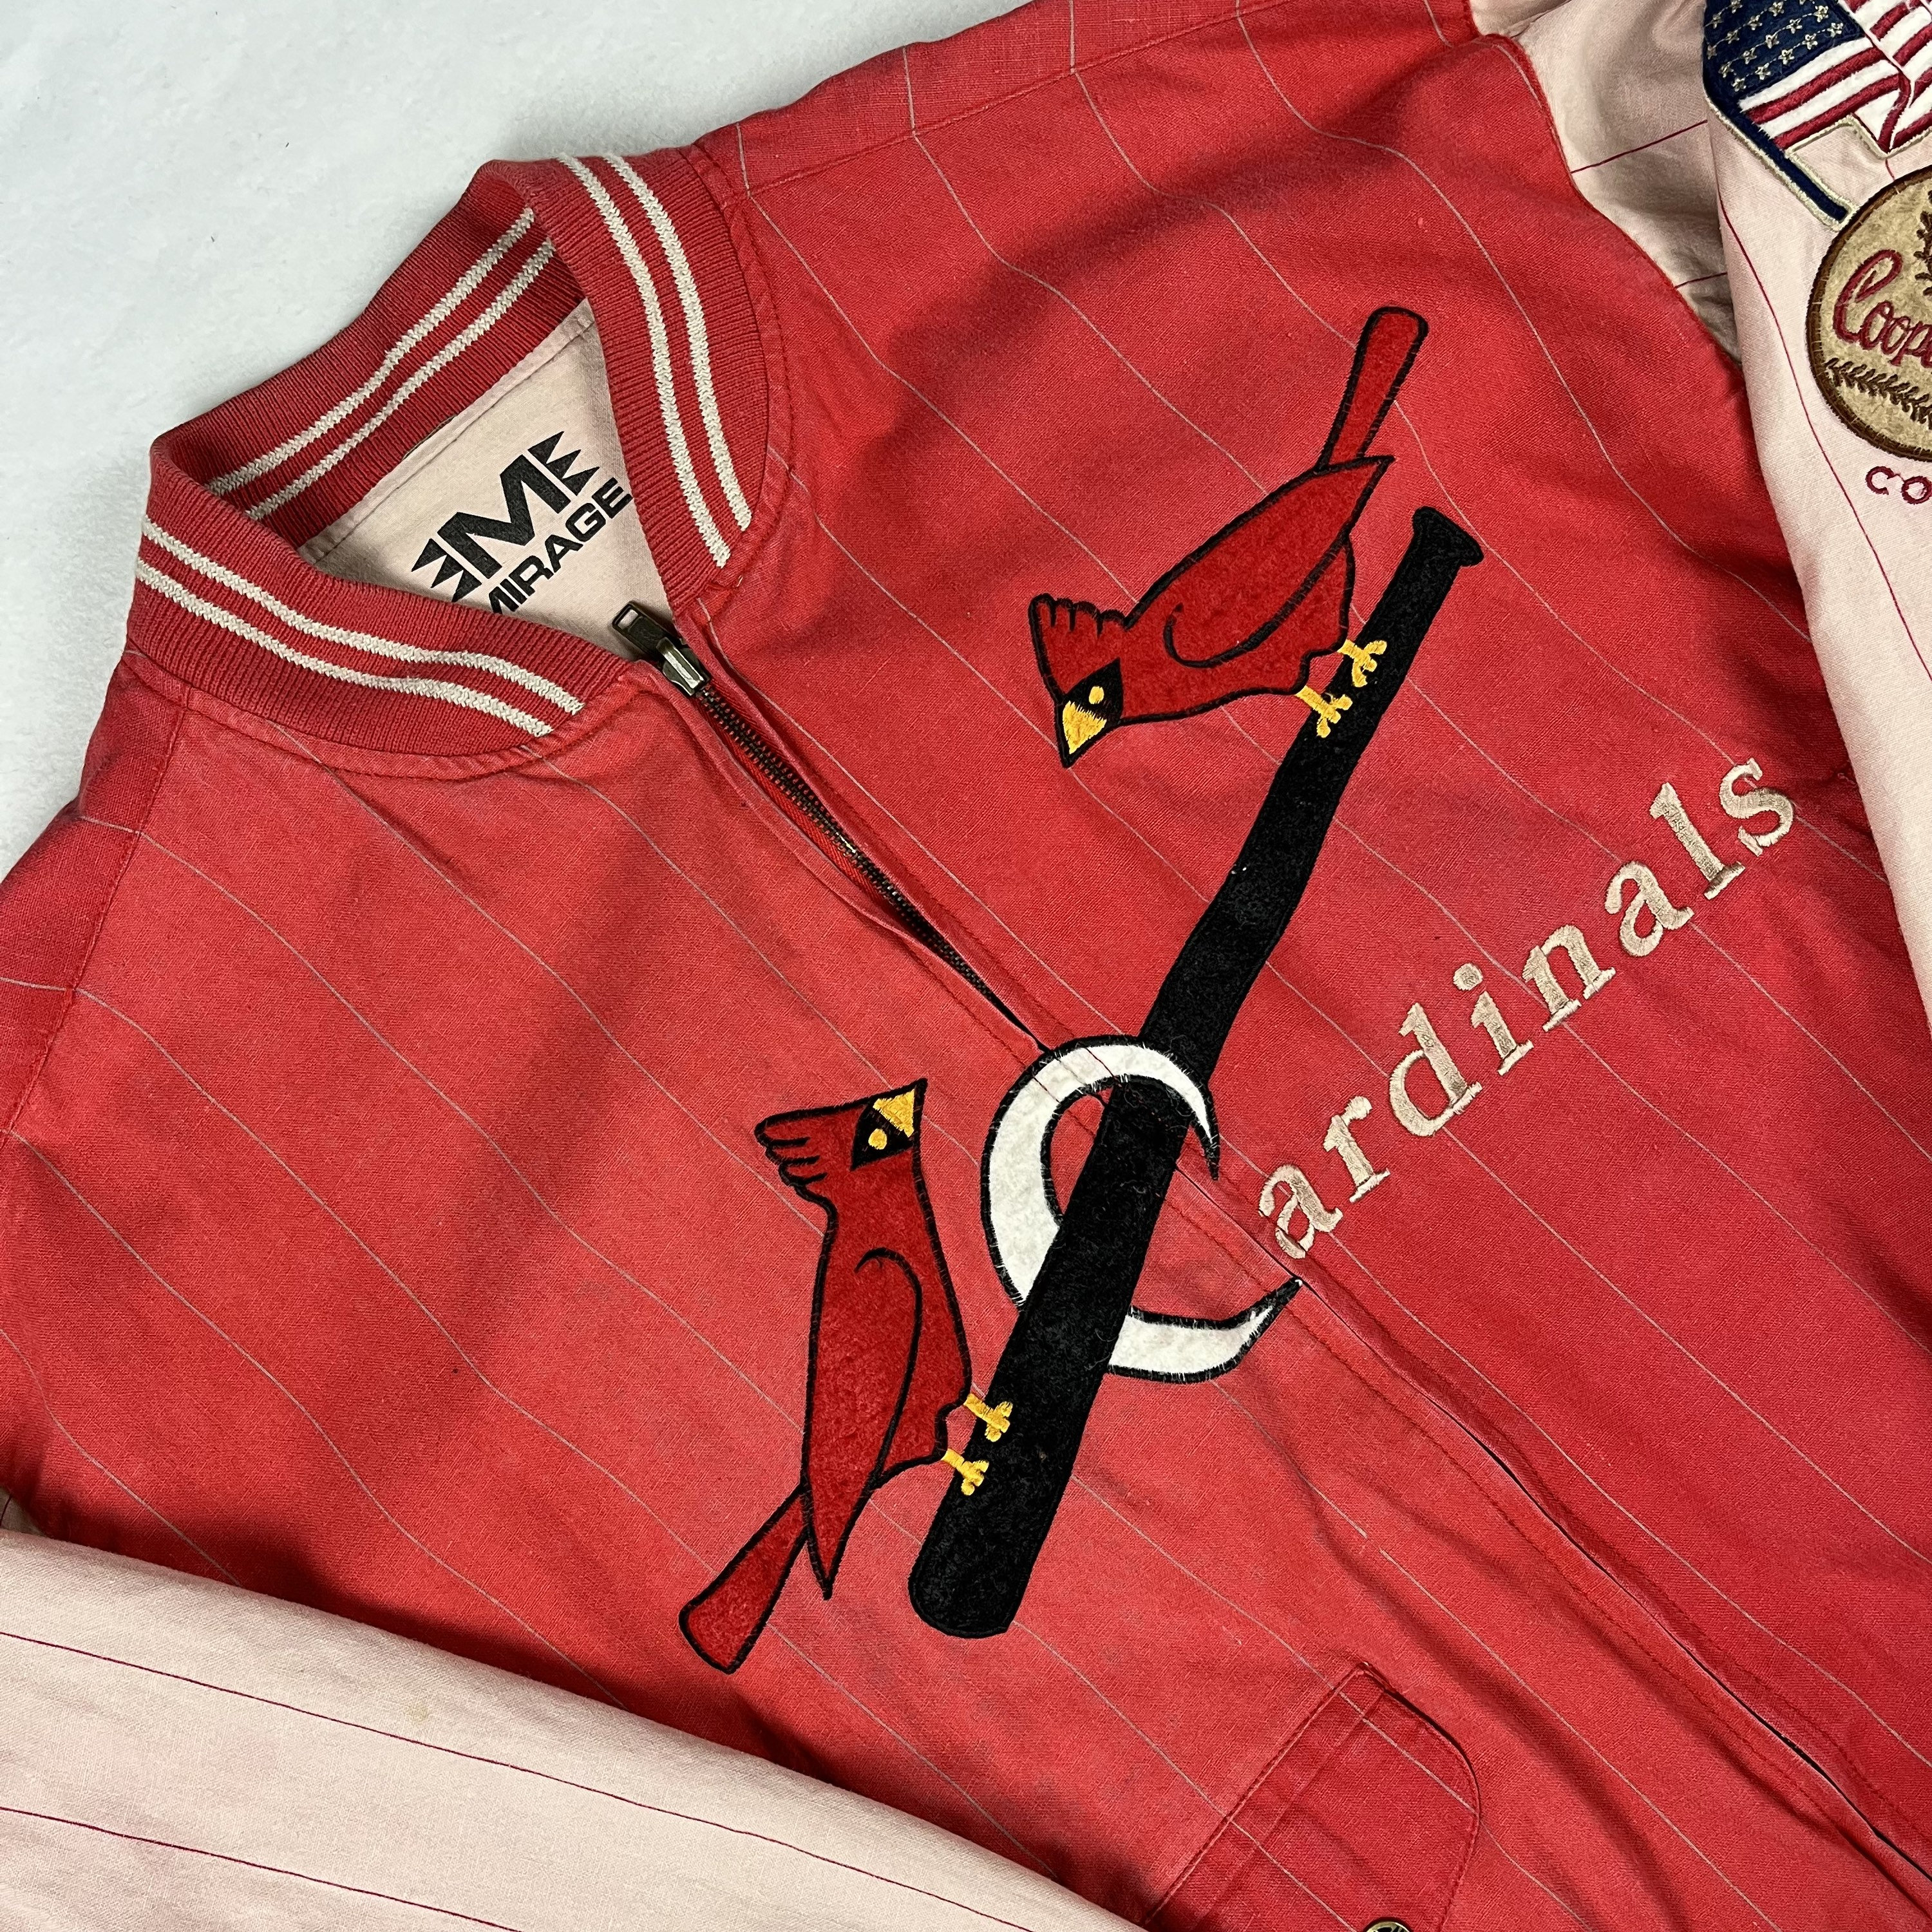 mitchell and ness cardinals jacket